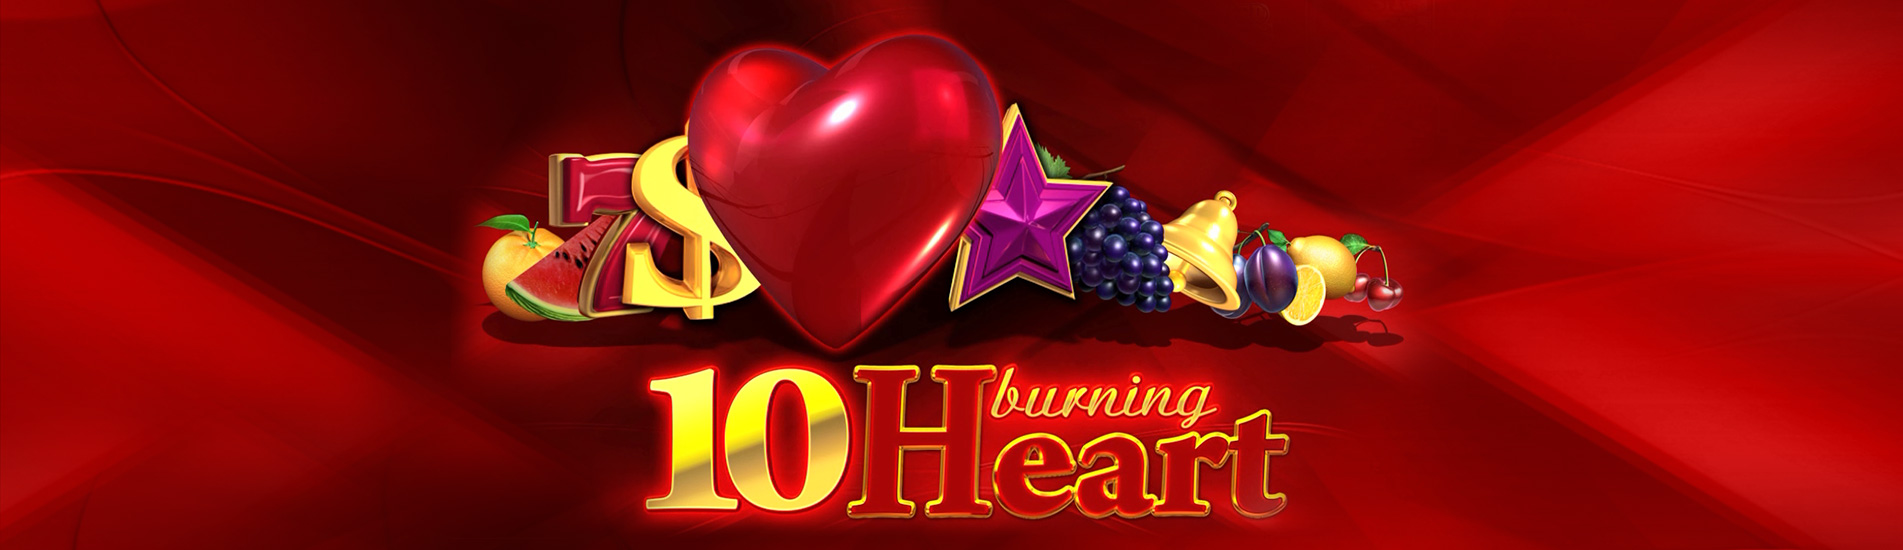 10 Burning Heart